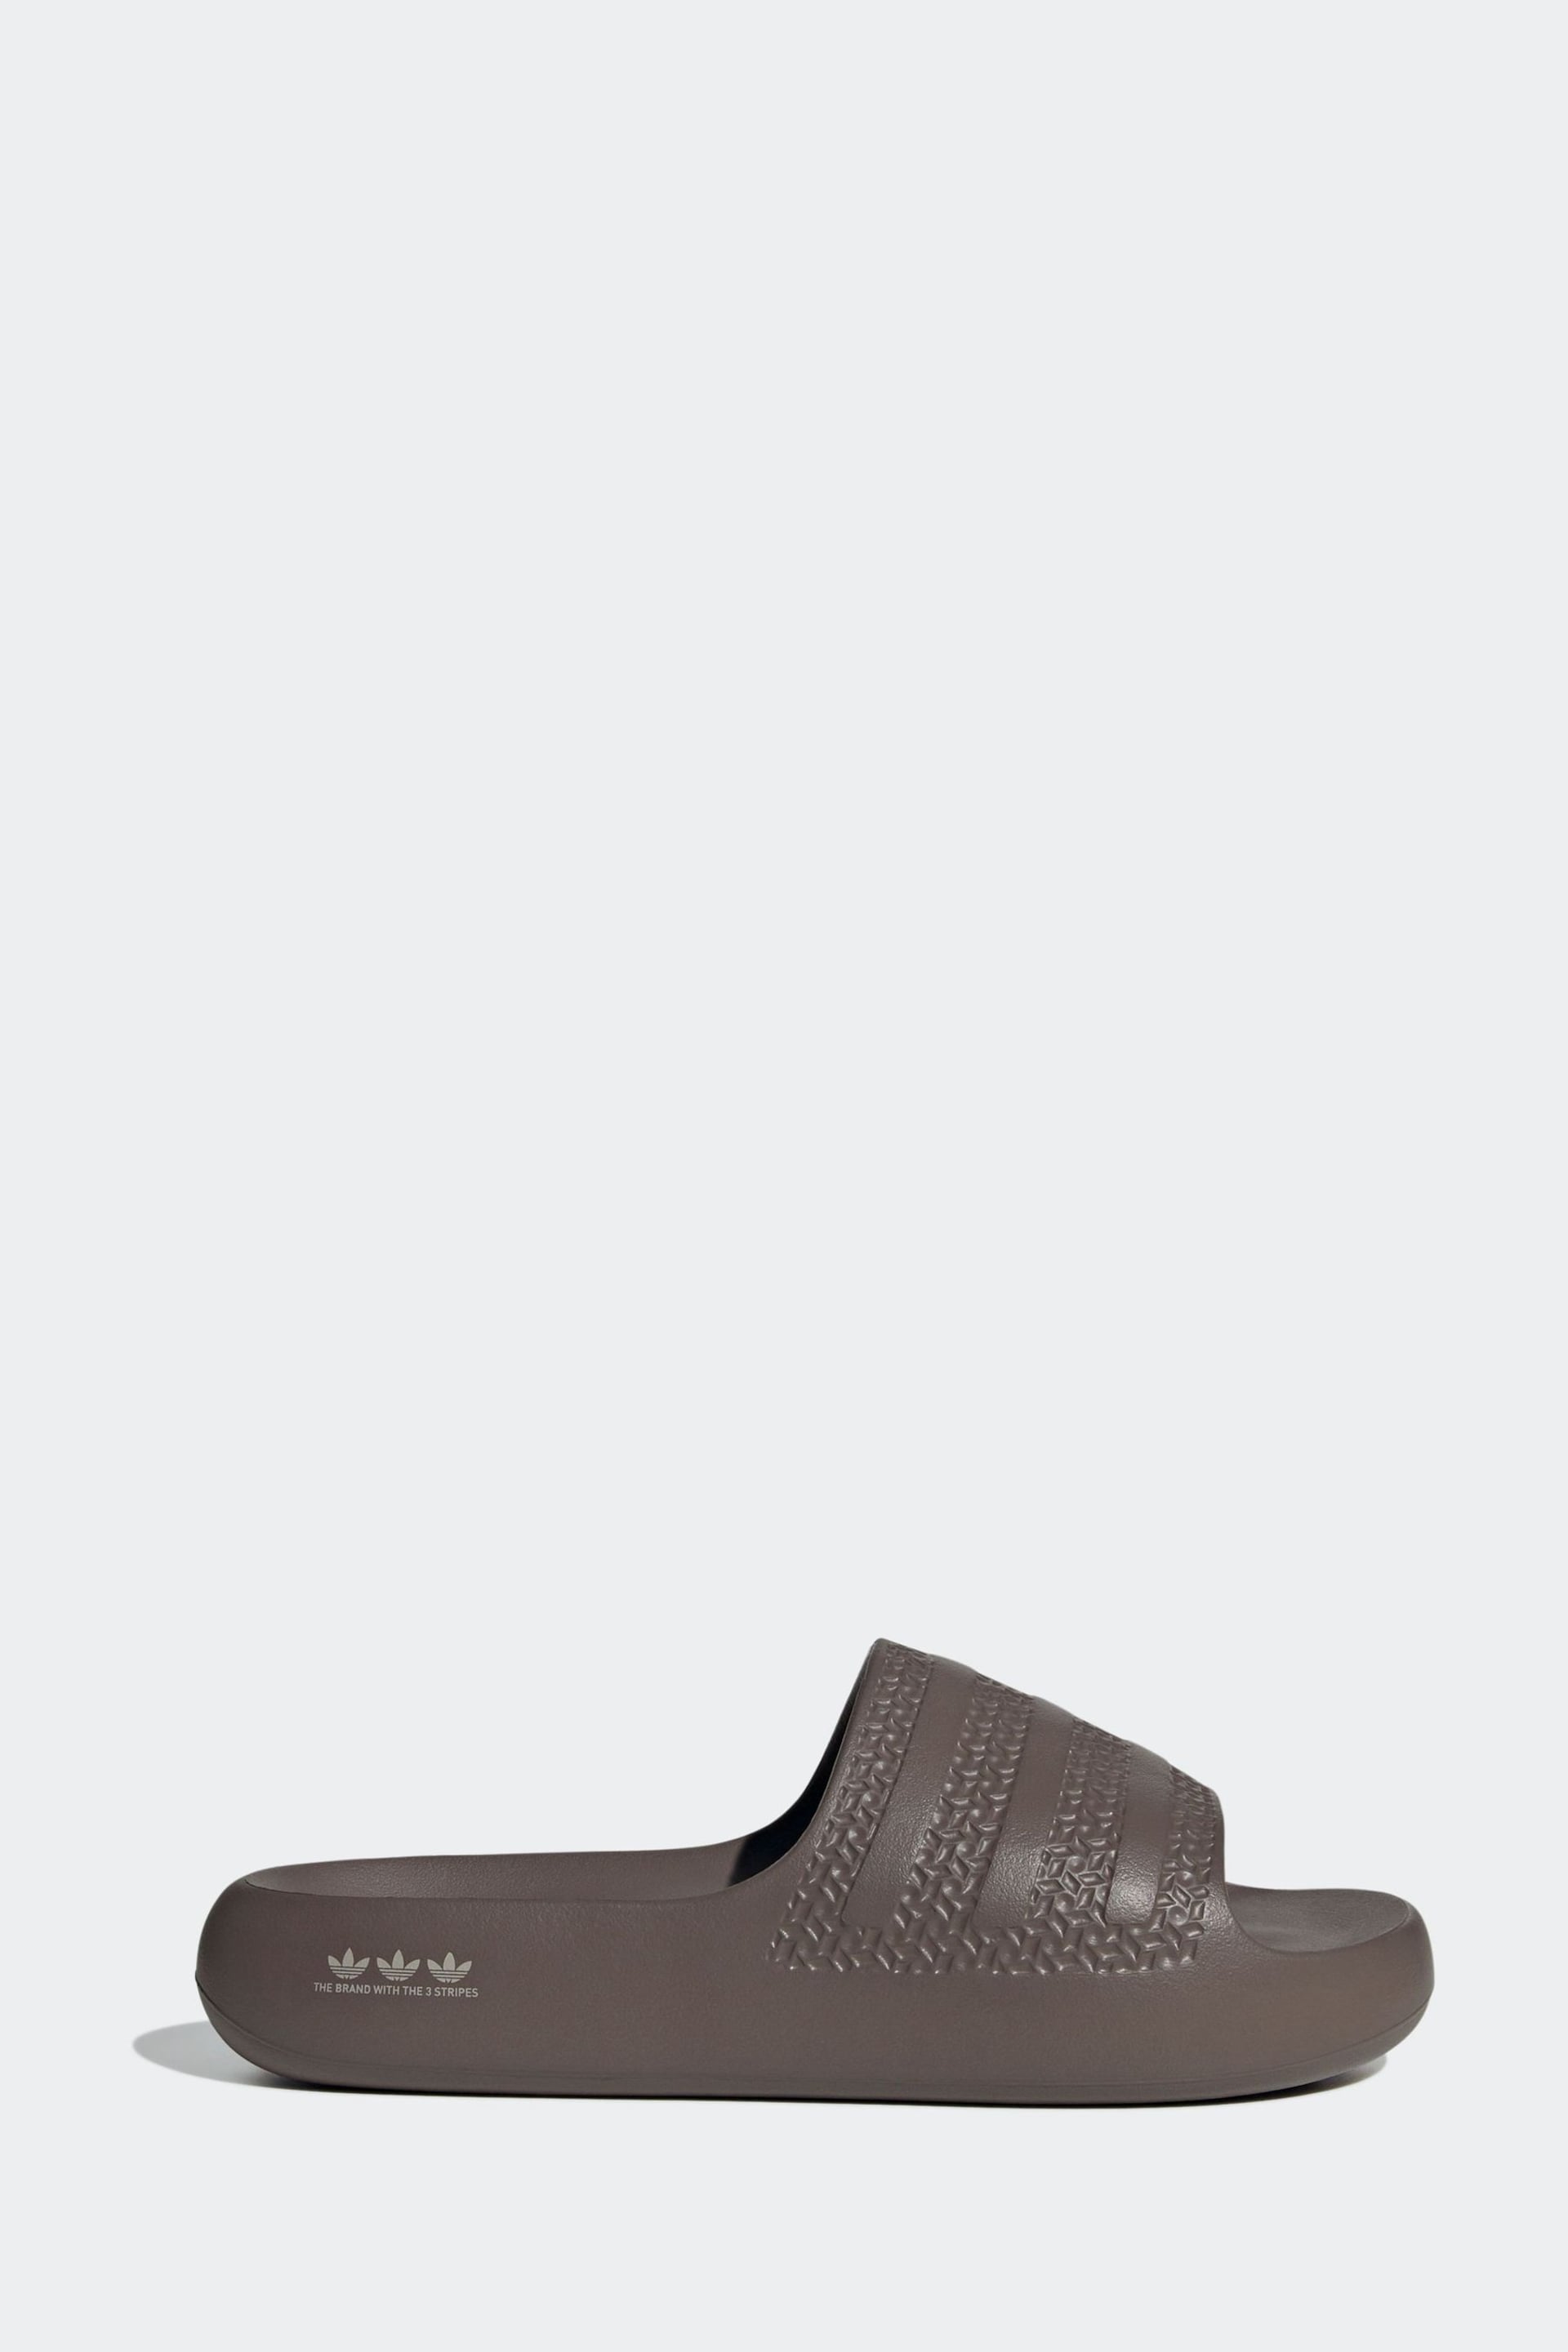 adidas Originals Adilette Ayoon Brown Slides - Image 1 of 9